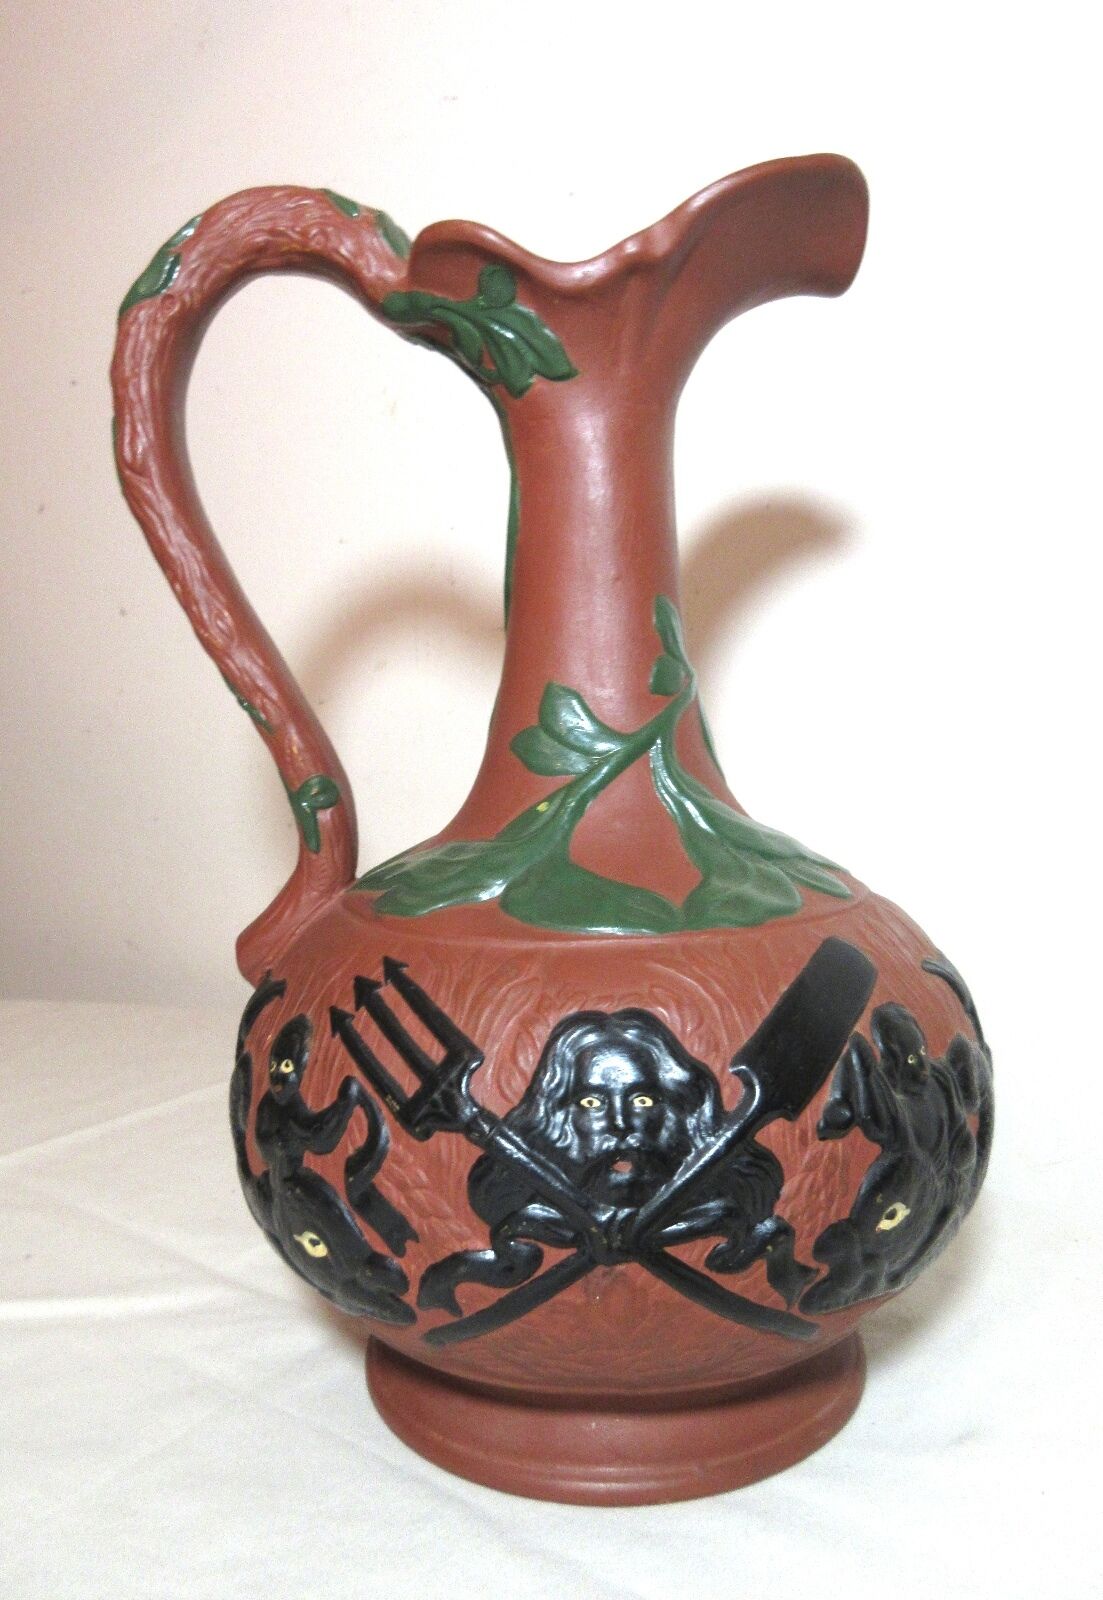 unusual antique figural Poseidon cherub riding dolphin ewer pottery pitcher jug 